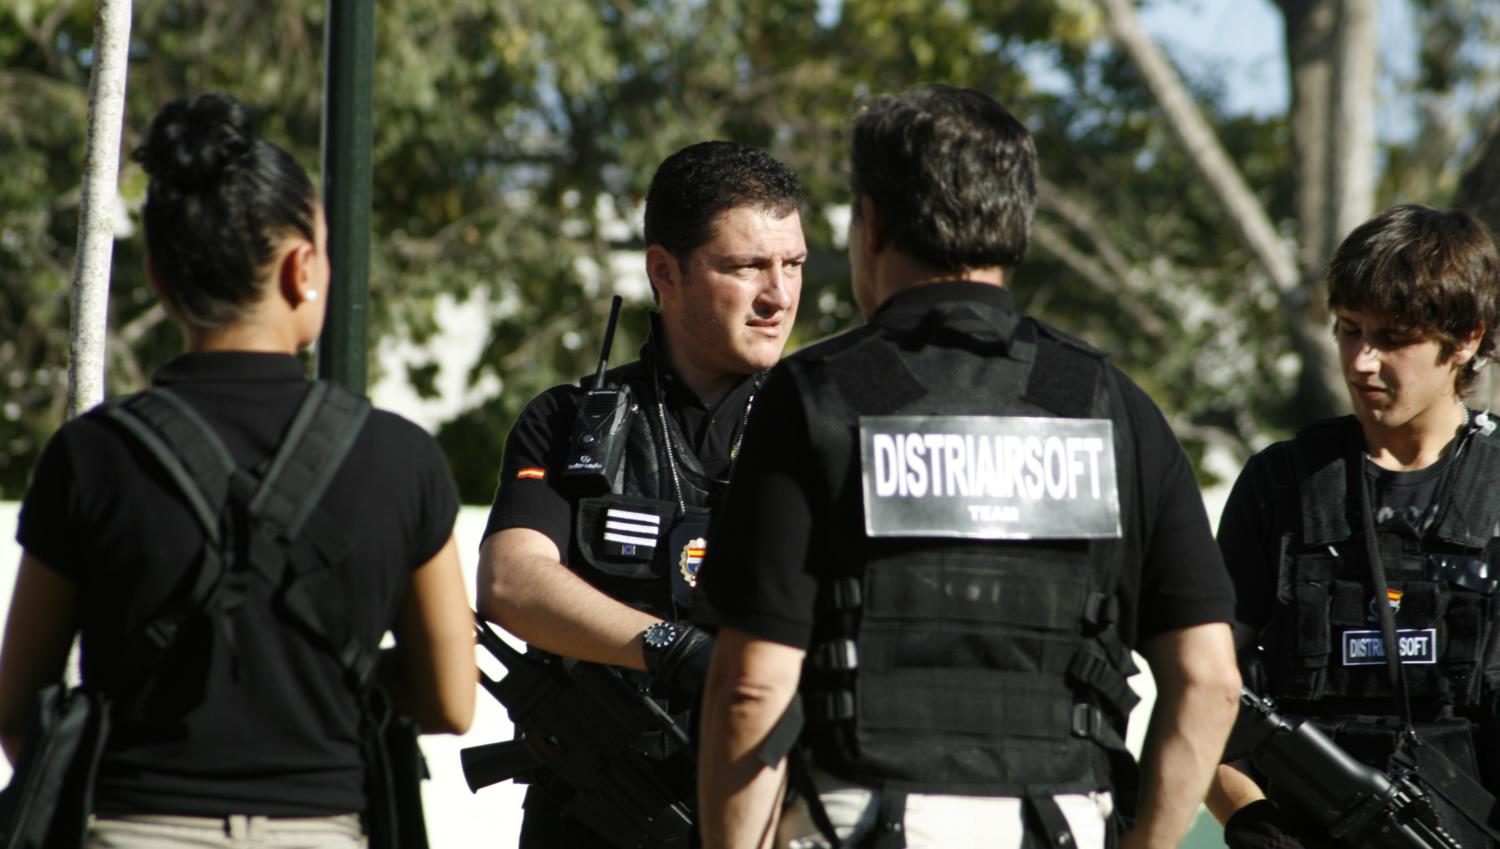 Spanish police undergoing training.